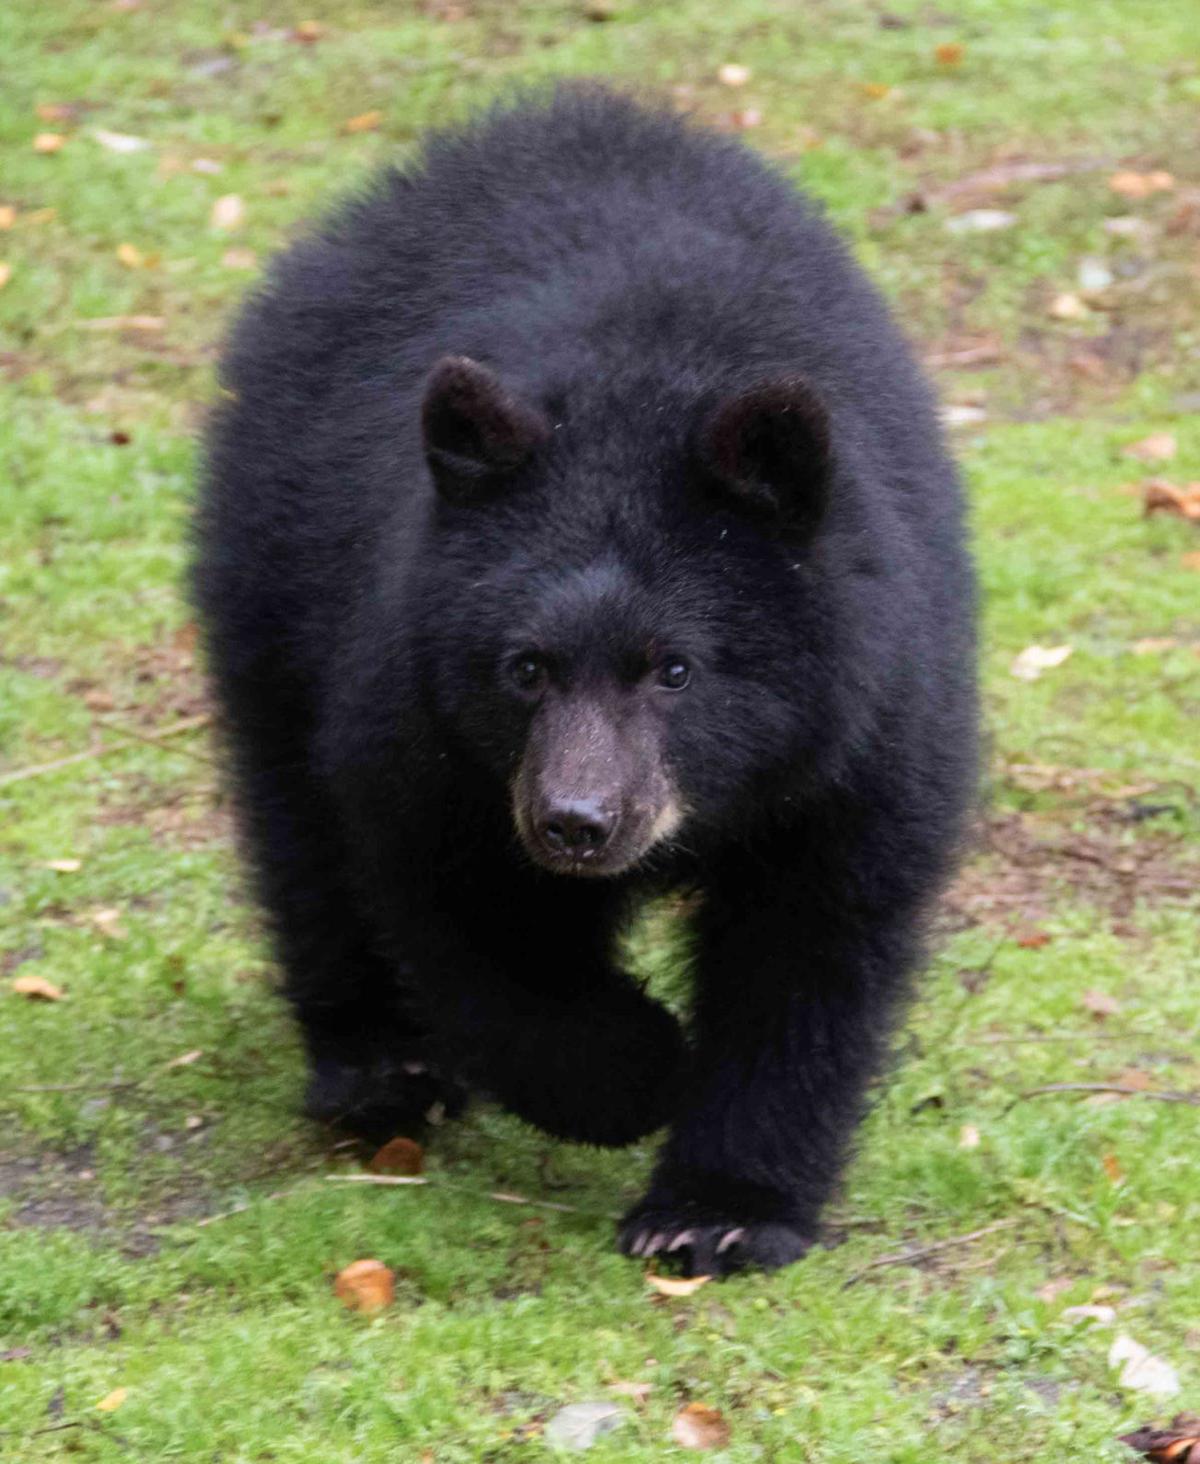 Watch Now Baraboo S Ochsner Park Zoo To Get New Orphaned Bear Cub From Alaska Regional News Wiscnews Com